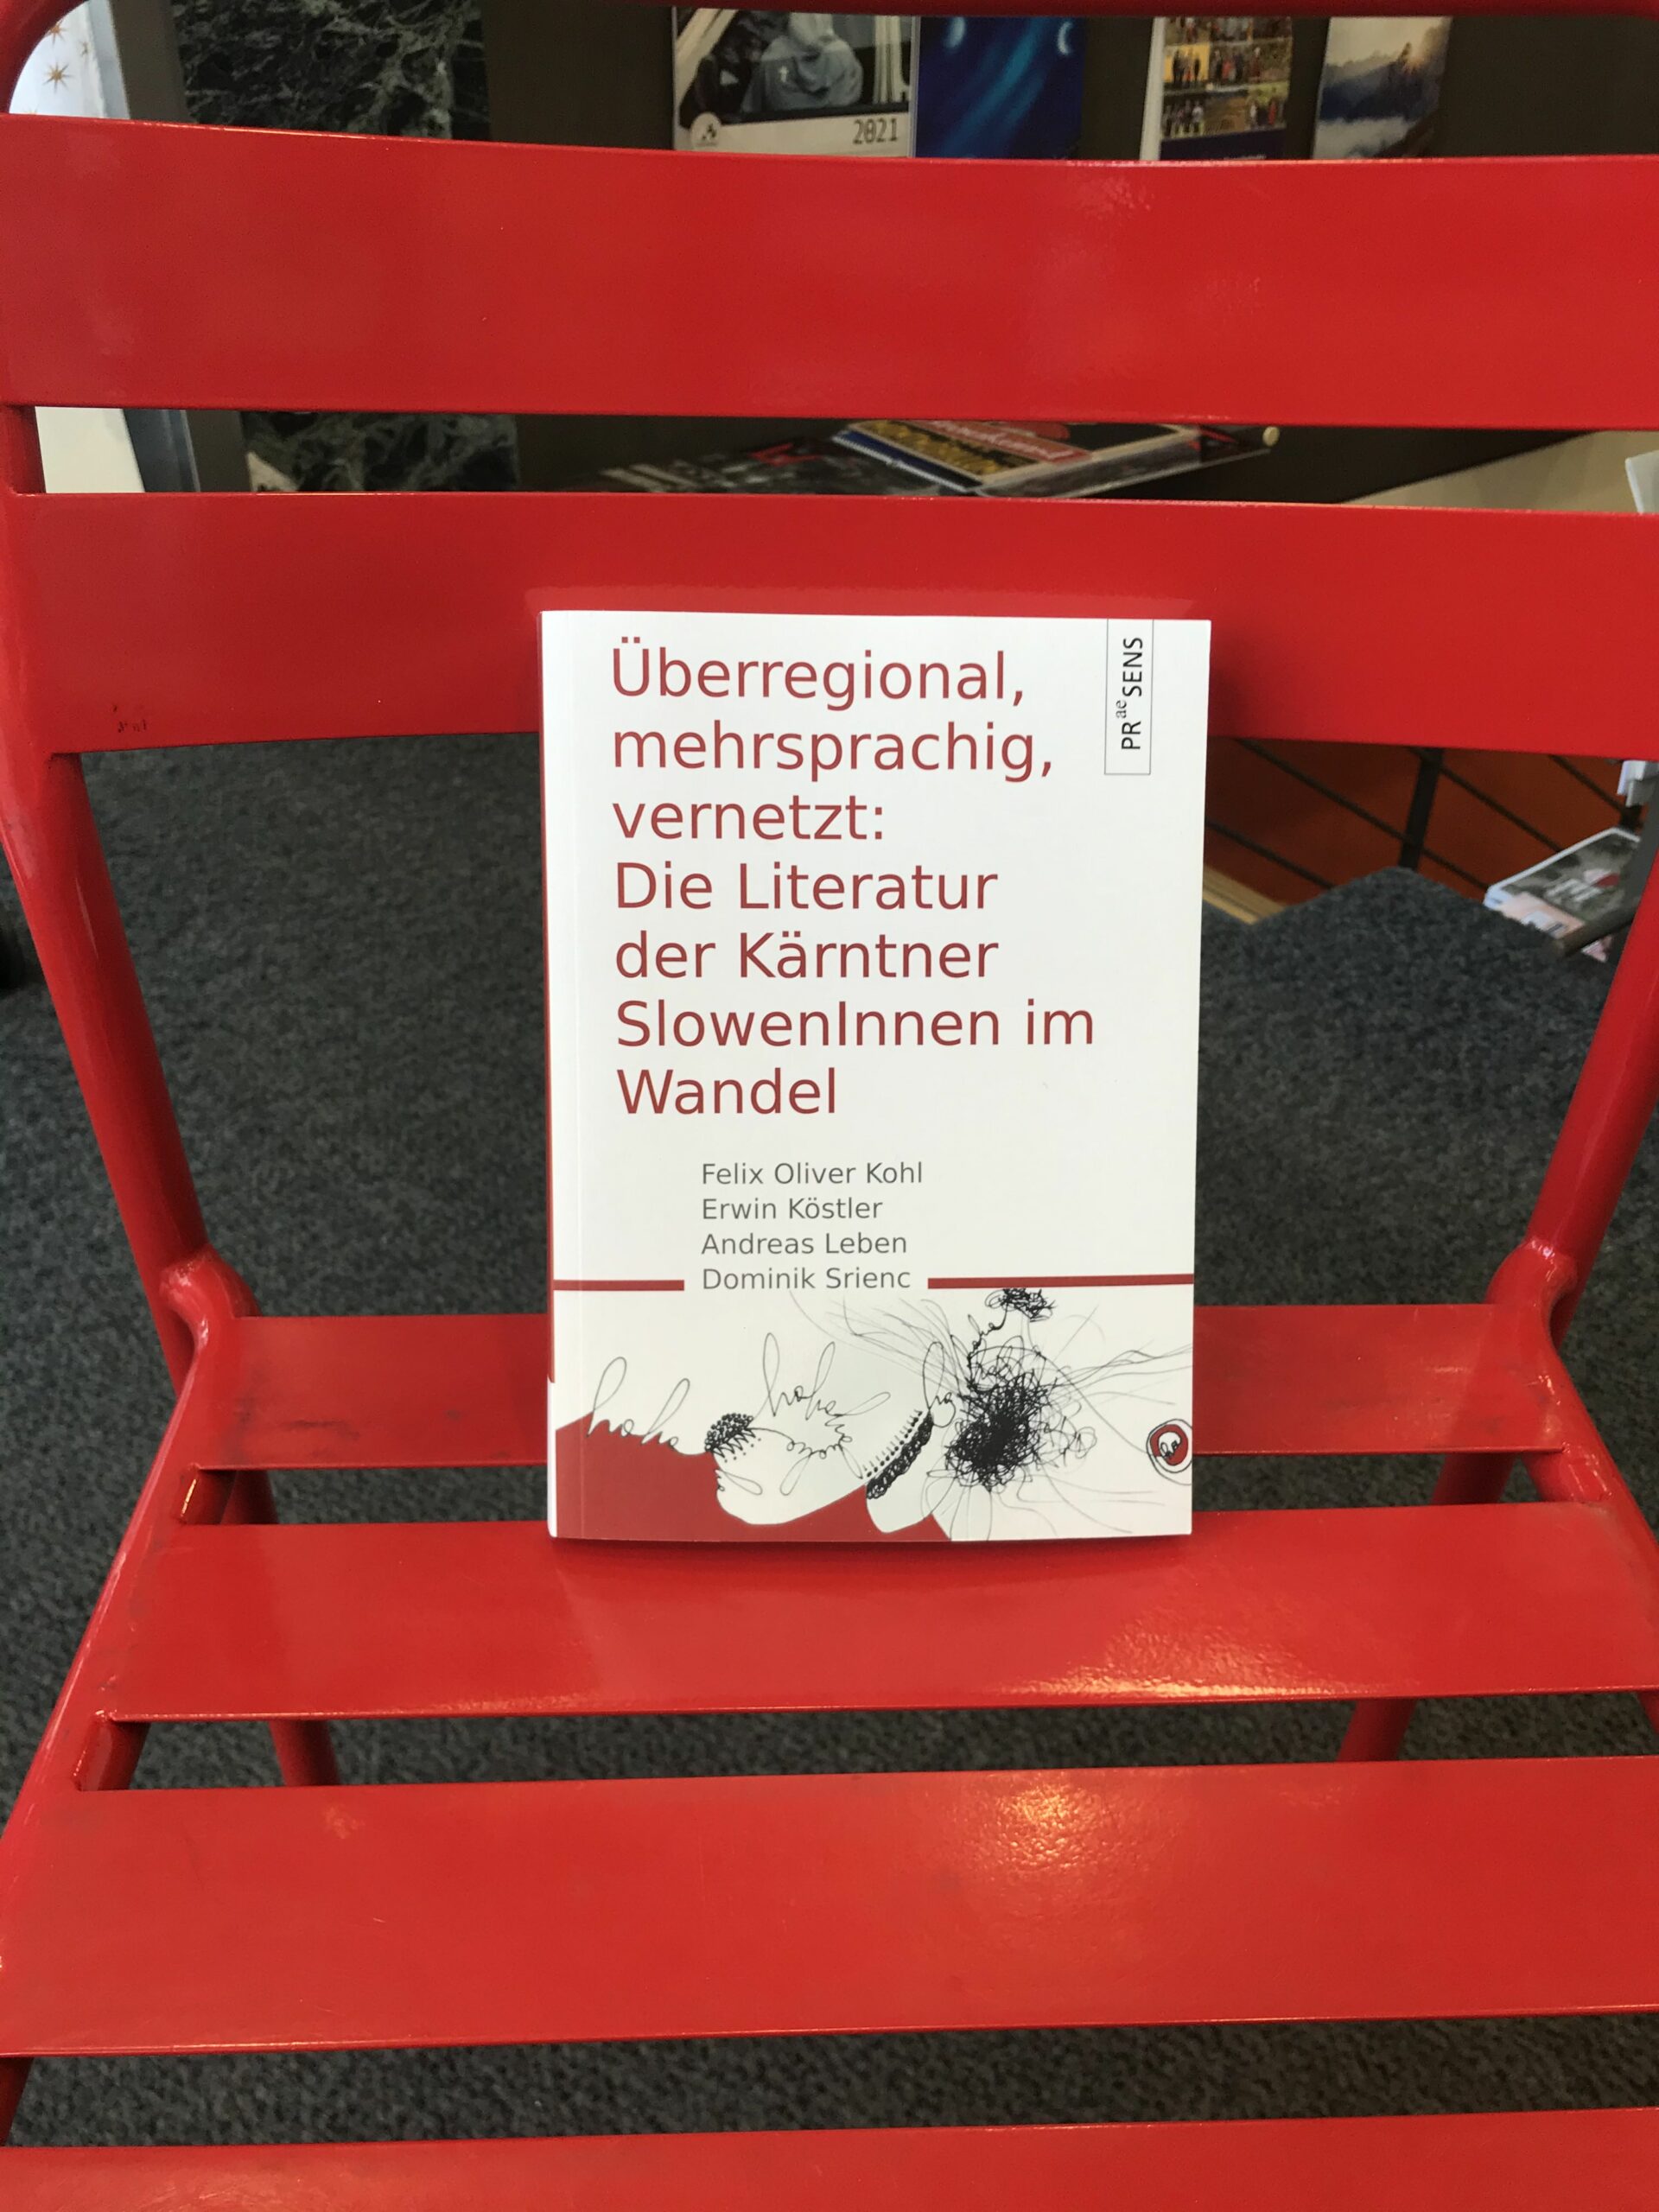 ❗️Naprodaj v naši knjigarni / Seit heute in unserer Buchhandlung erhältlich❗️